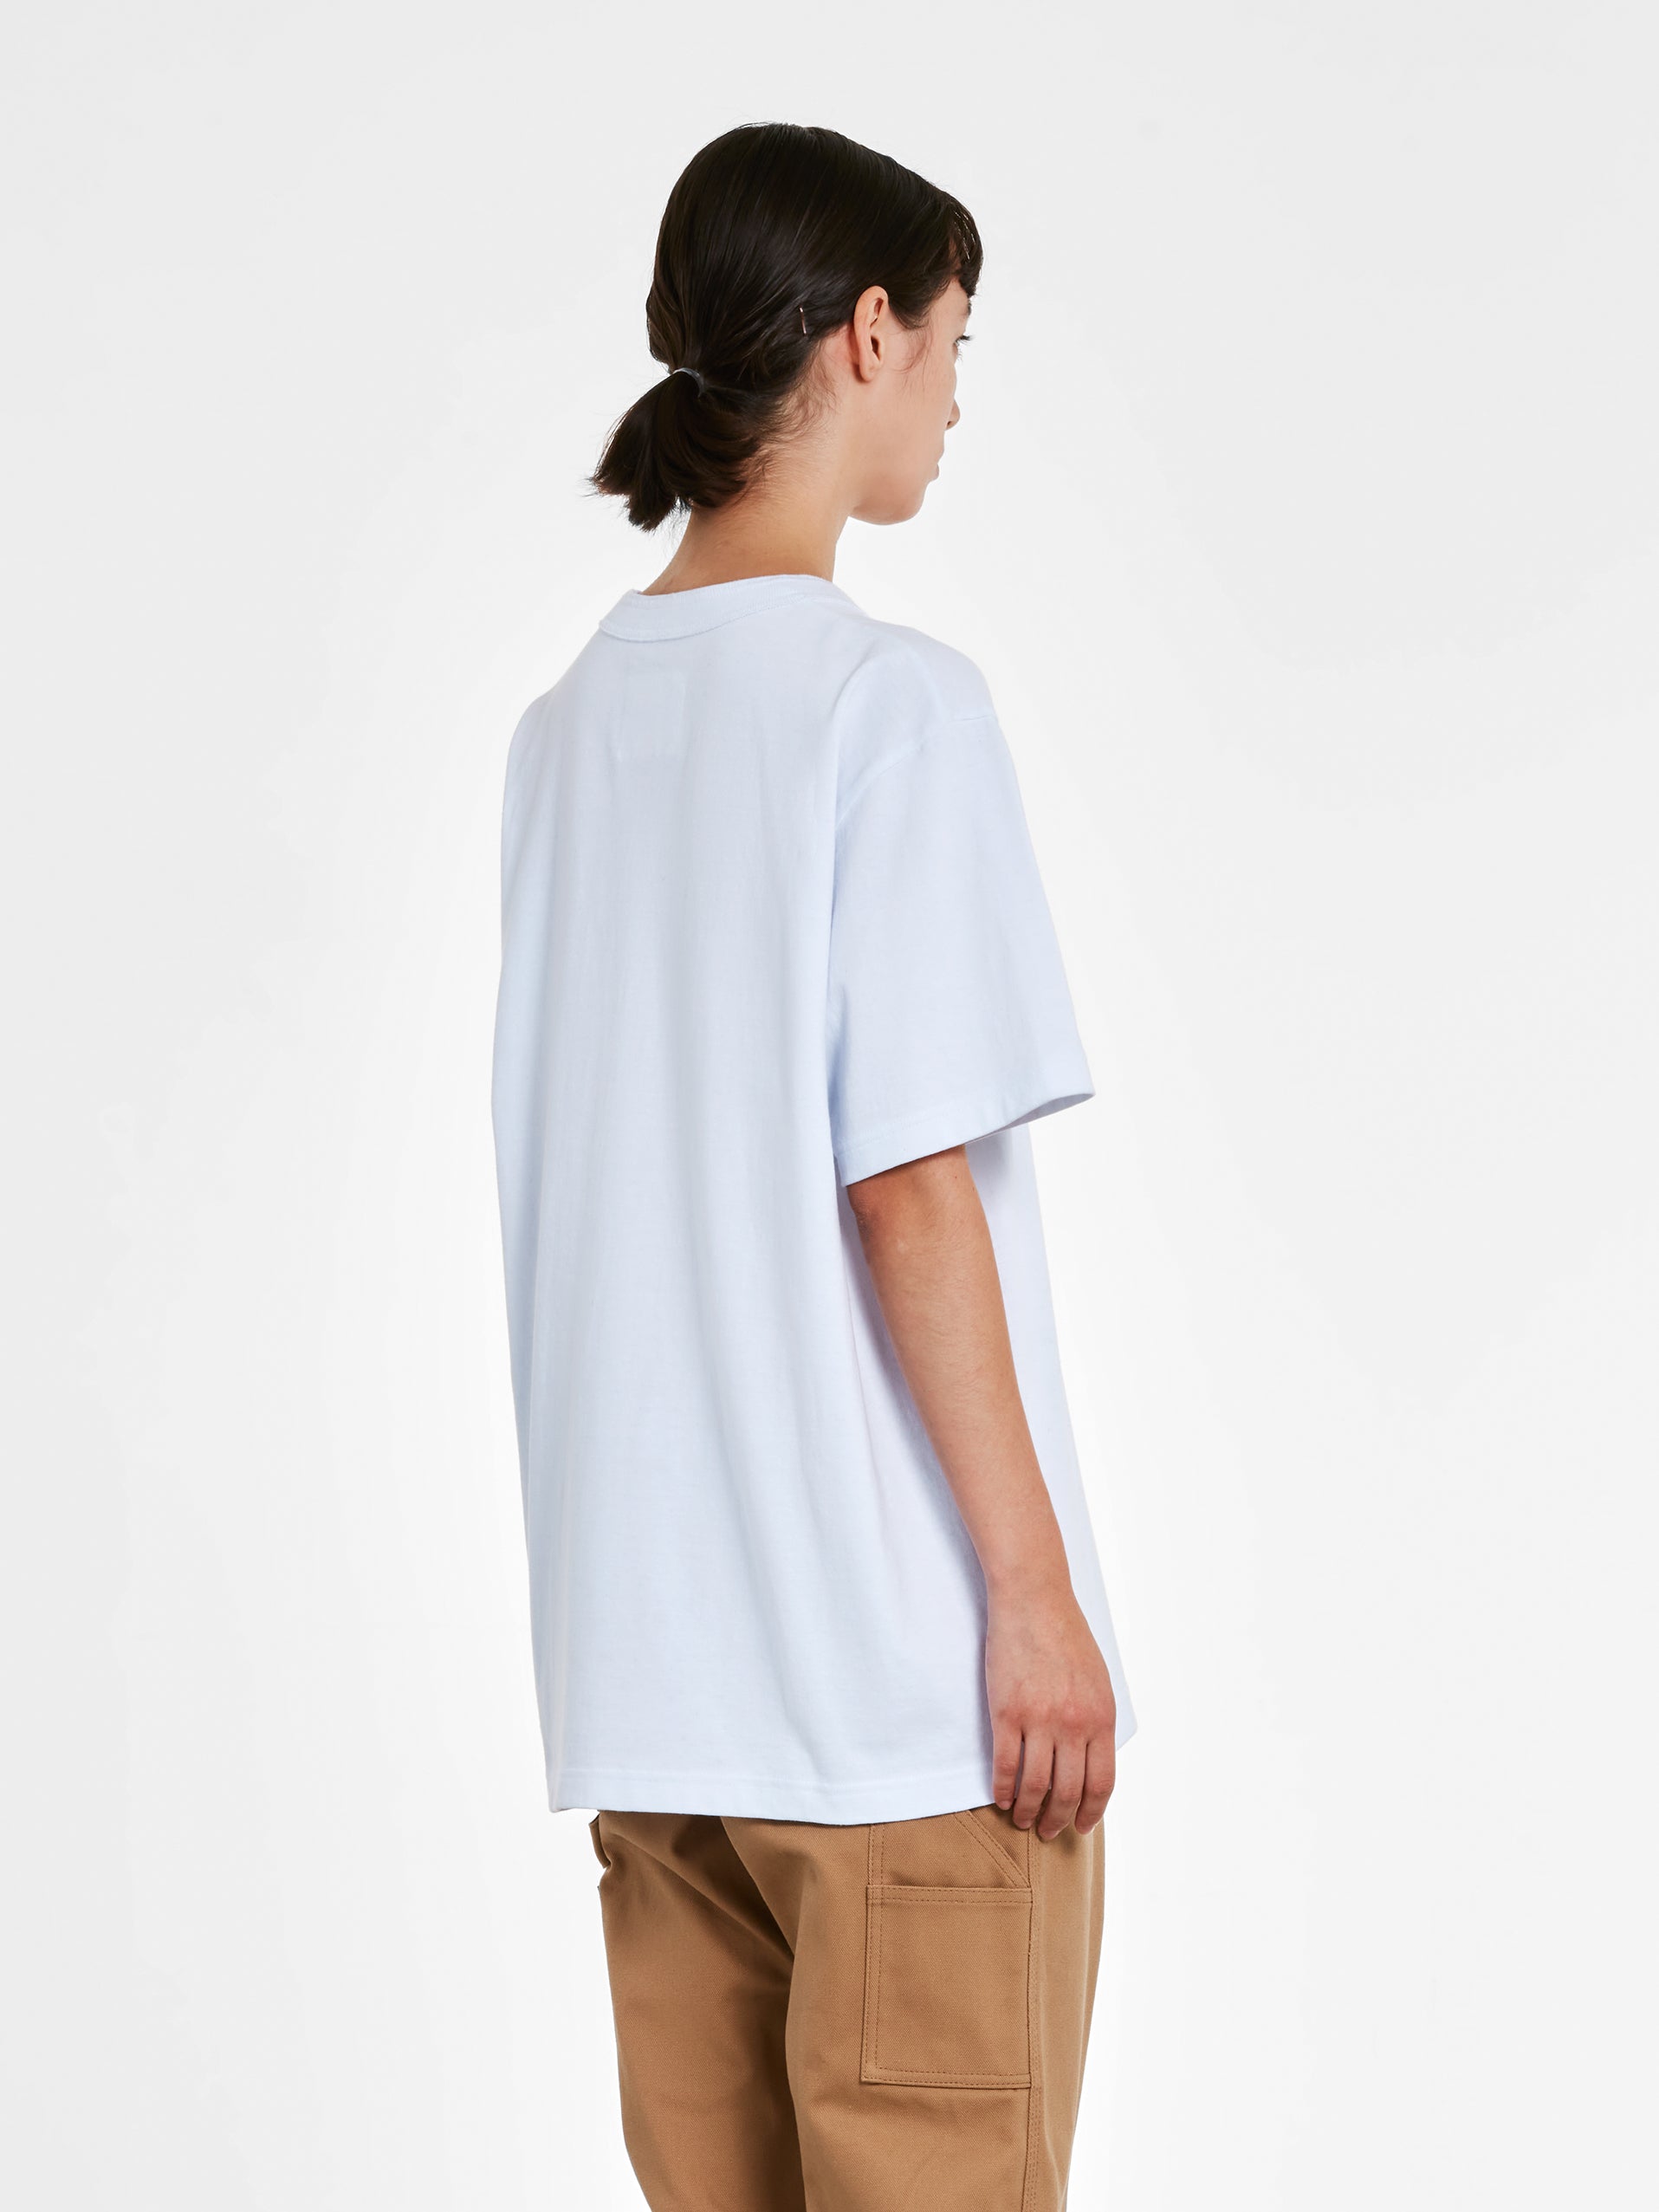 sacai - Carhartt WIP T-Shirt - (White) view 3